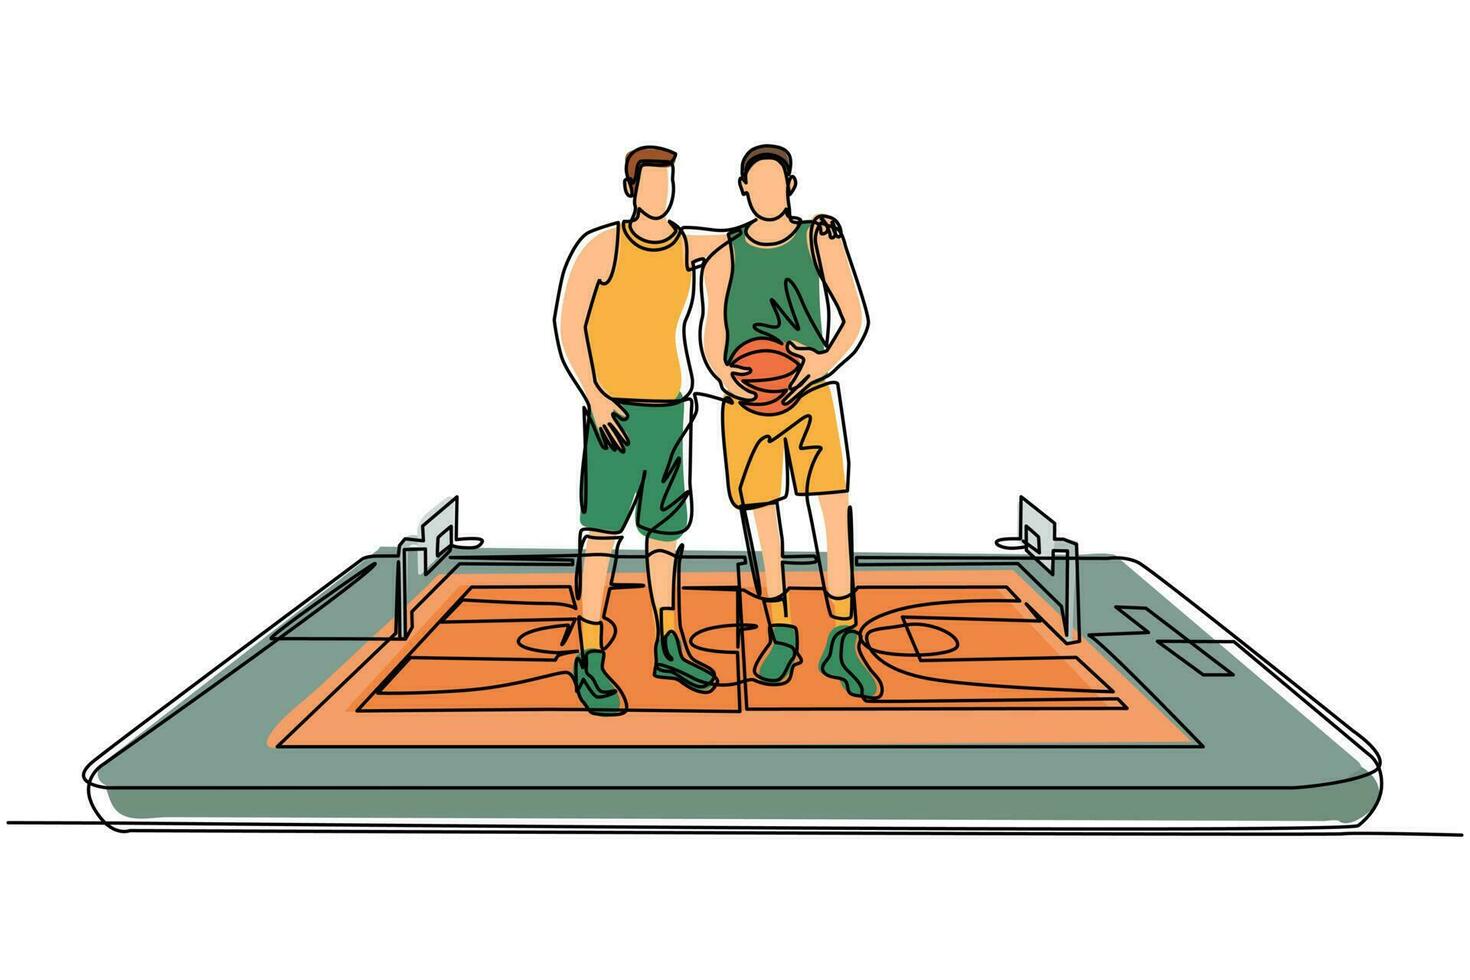 en rad ritning två basketspelare omfamnar varandra på ytan av smartphone. mobil basket. mobil sport spela match. modern kontinuerlig linje rita design grafisk vektorillustration vektor